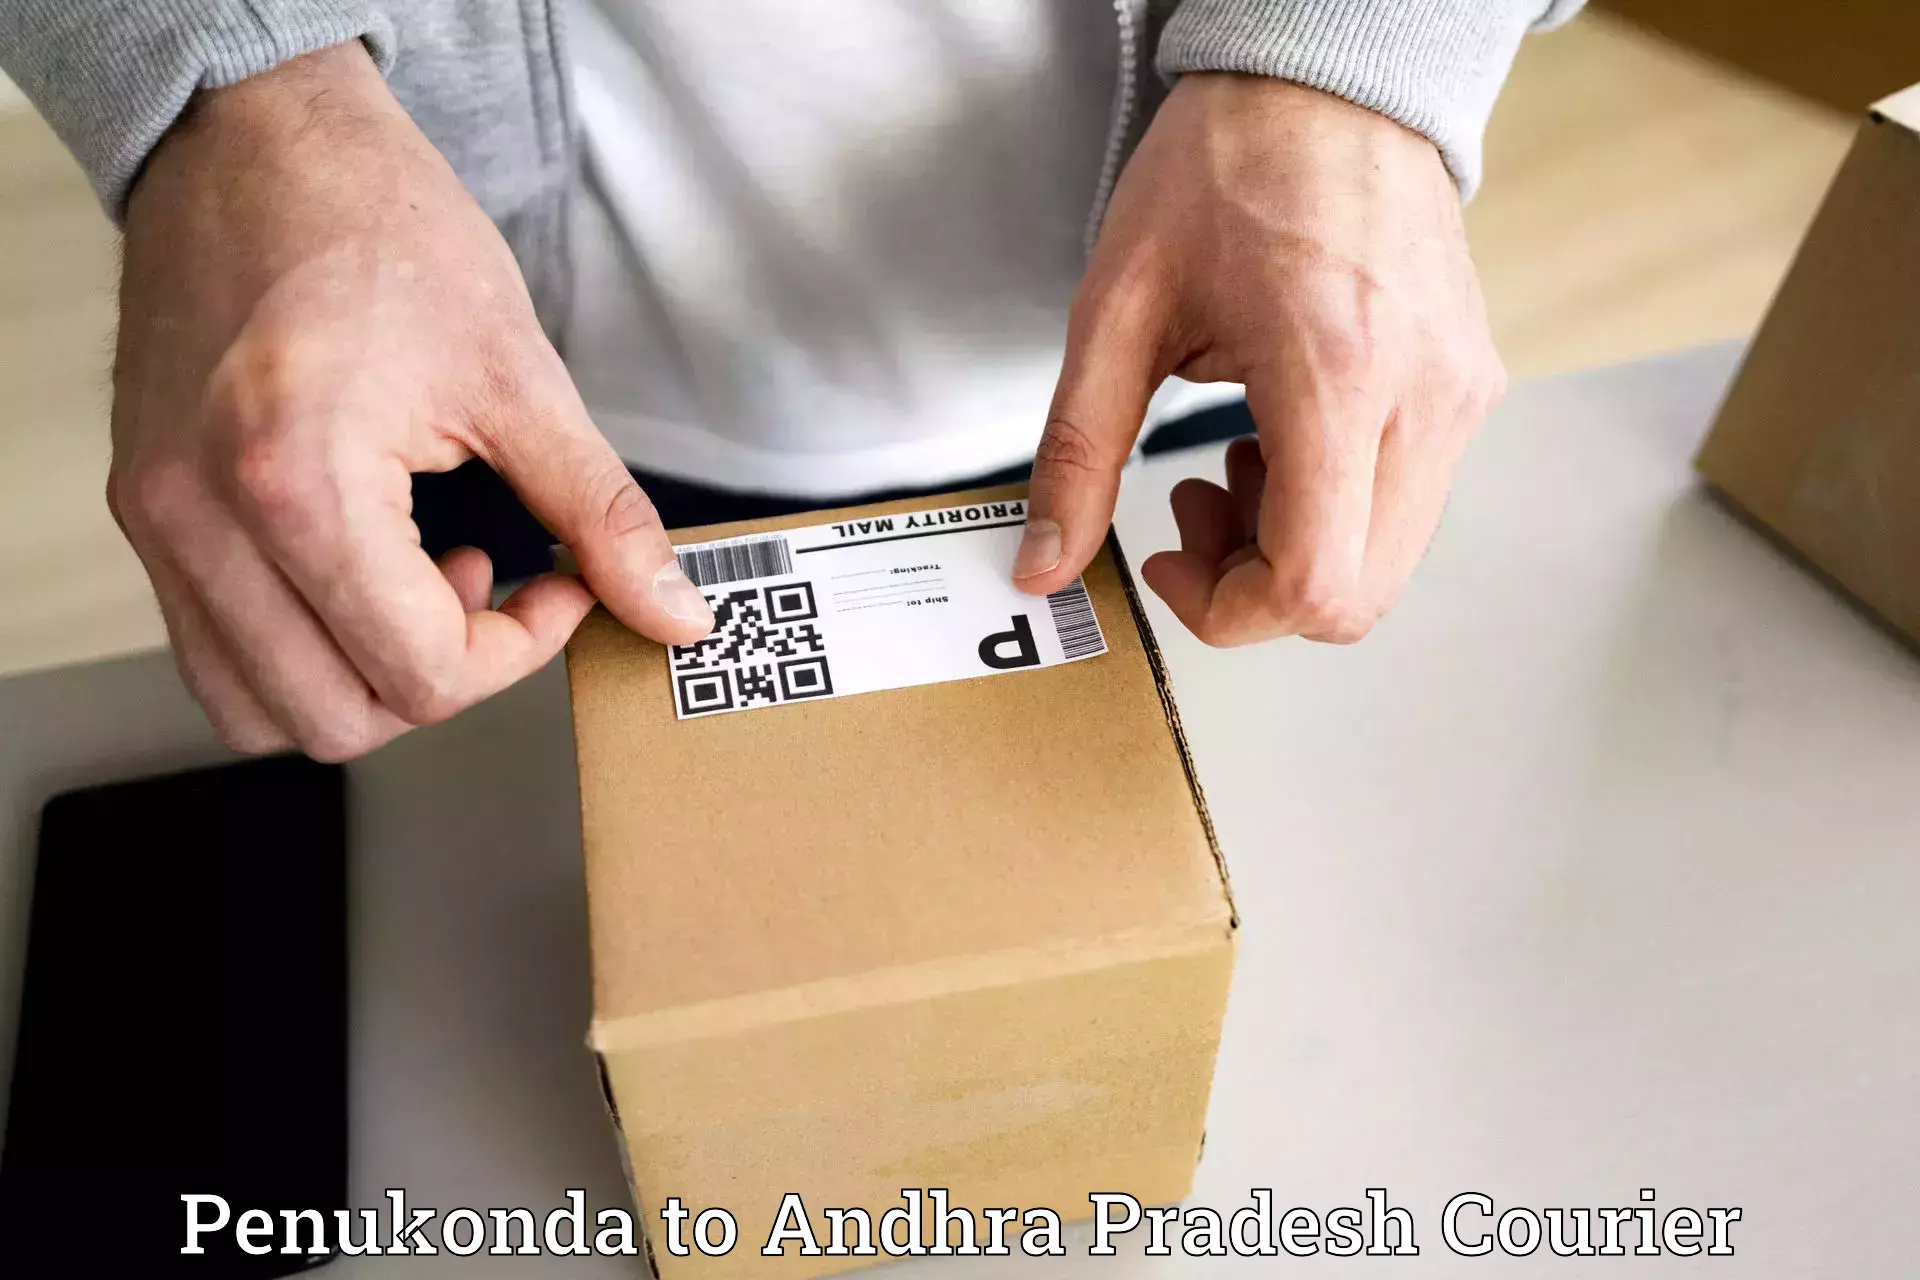 Reliable parcel services in Penukonda to Andhra Pradesh